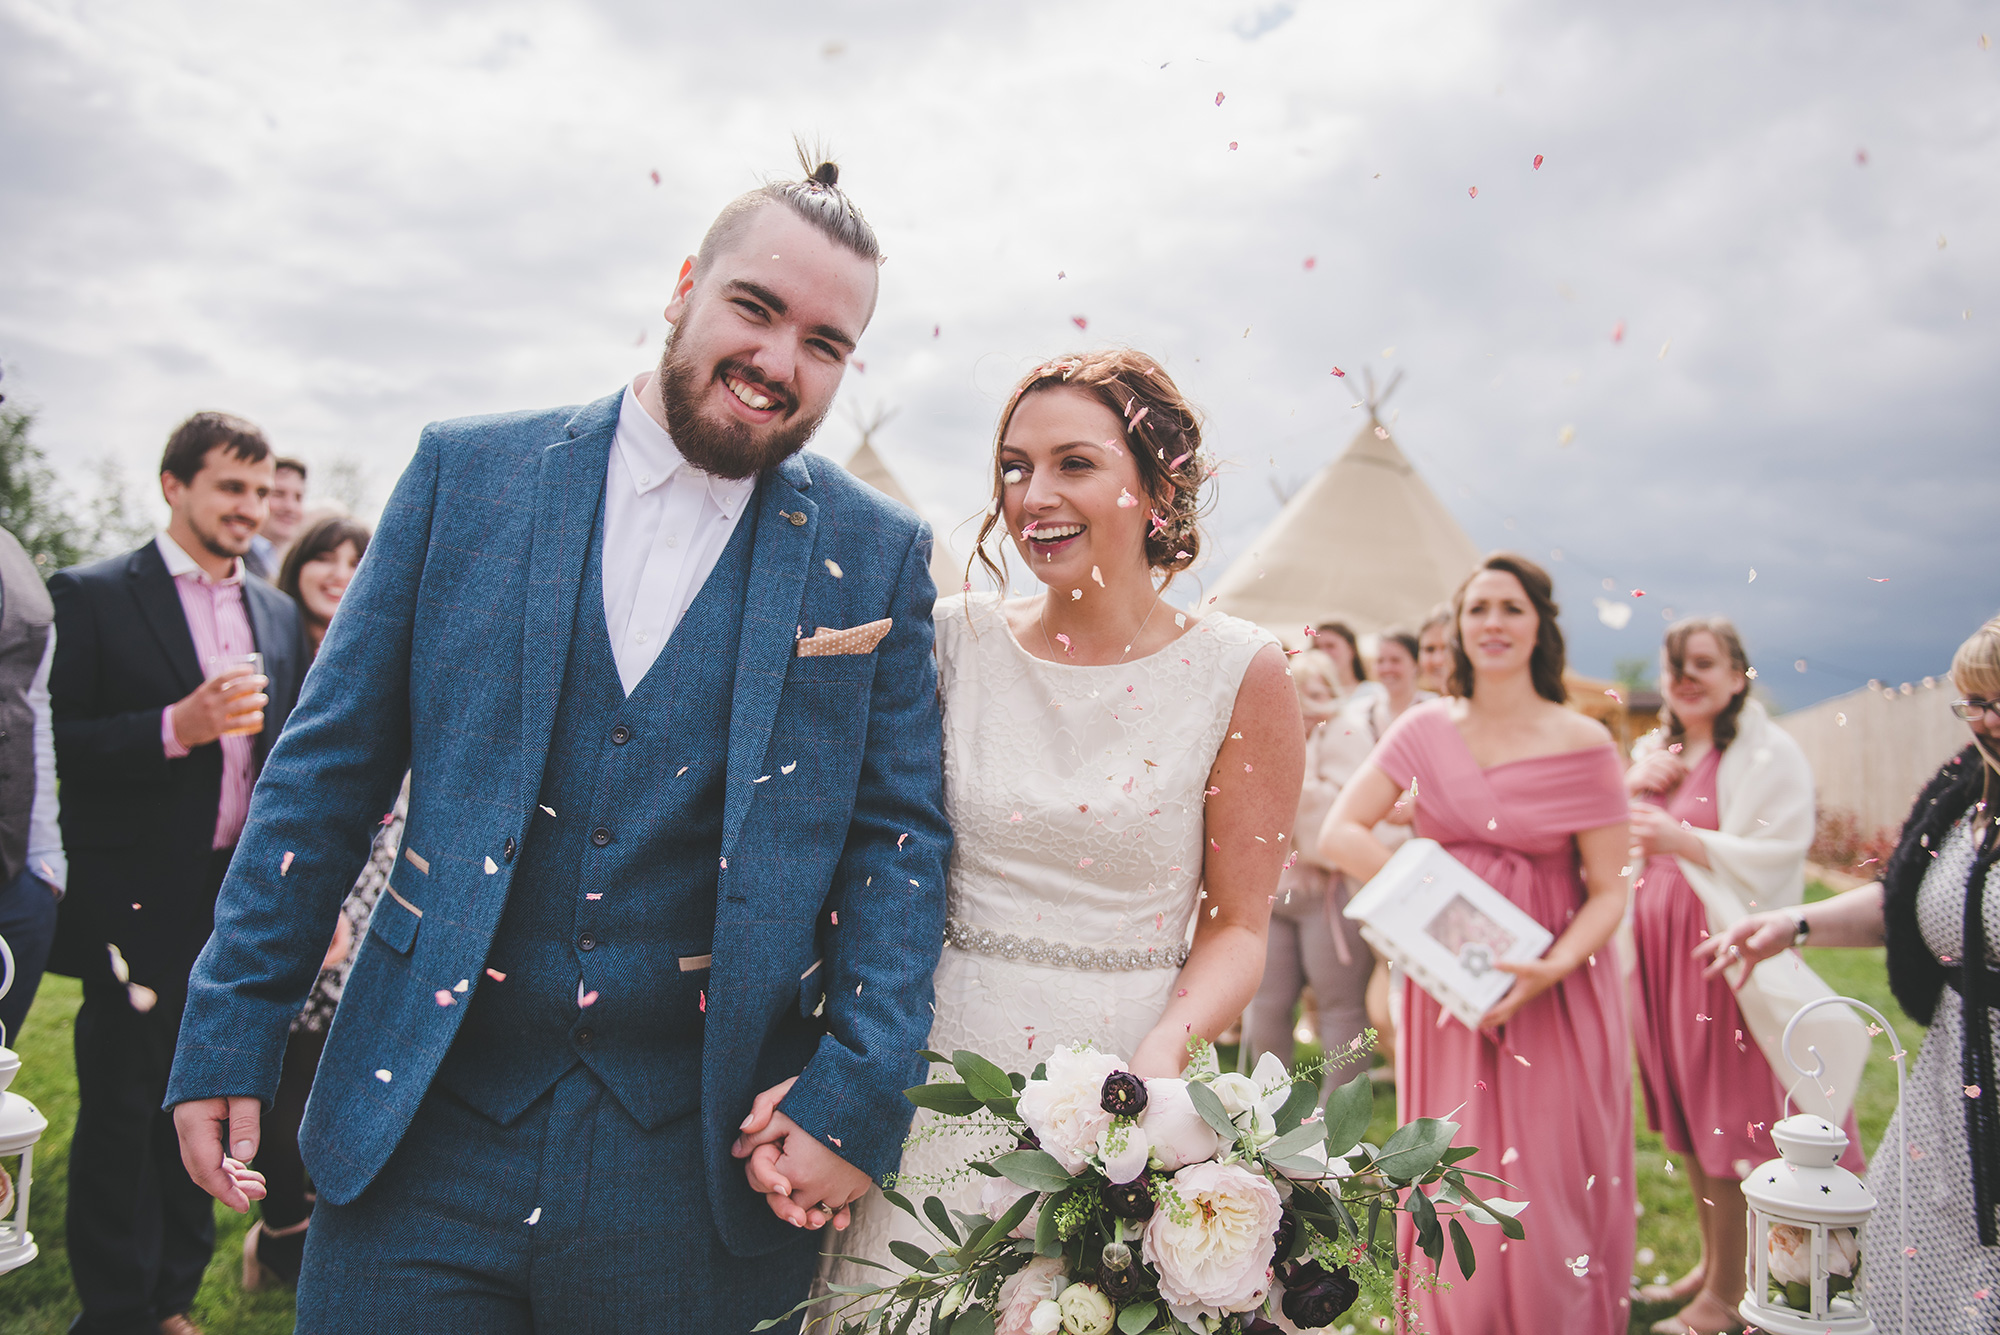 Laura_Andrew_Rustic-Homemade-Wedding_Rhi-Scotchbrook-Photography_036